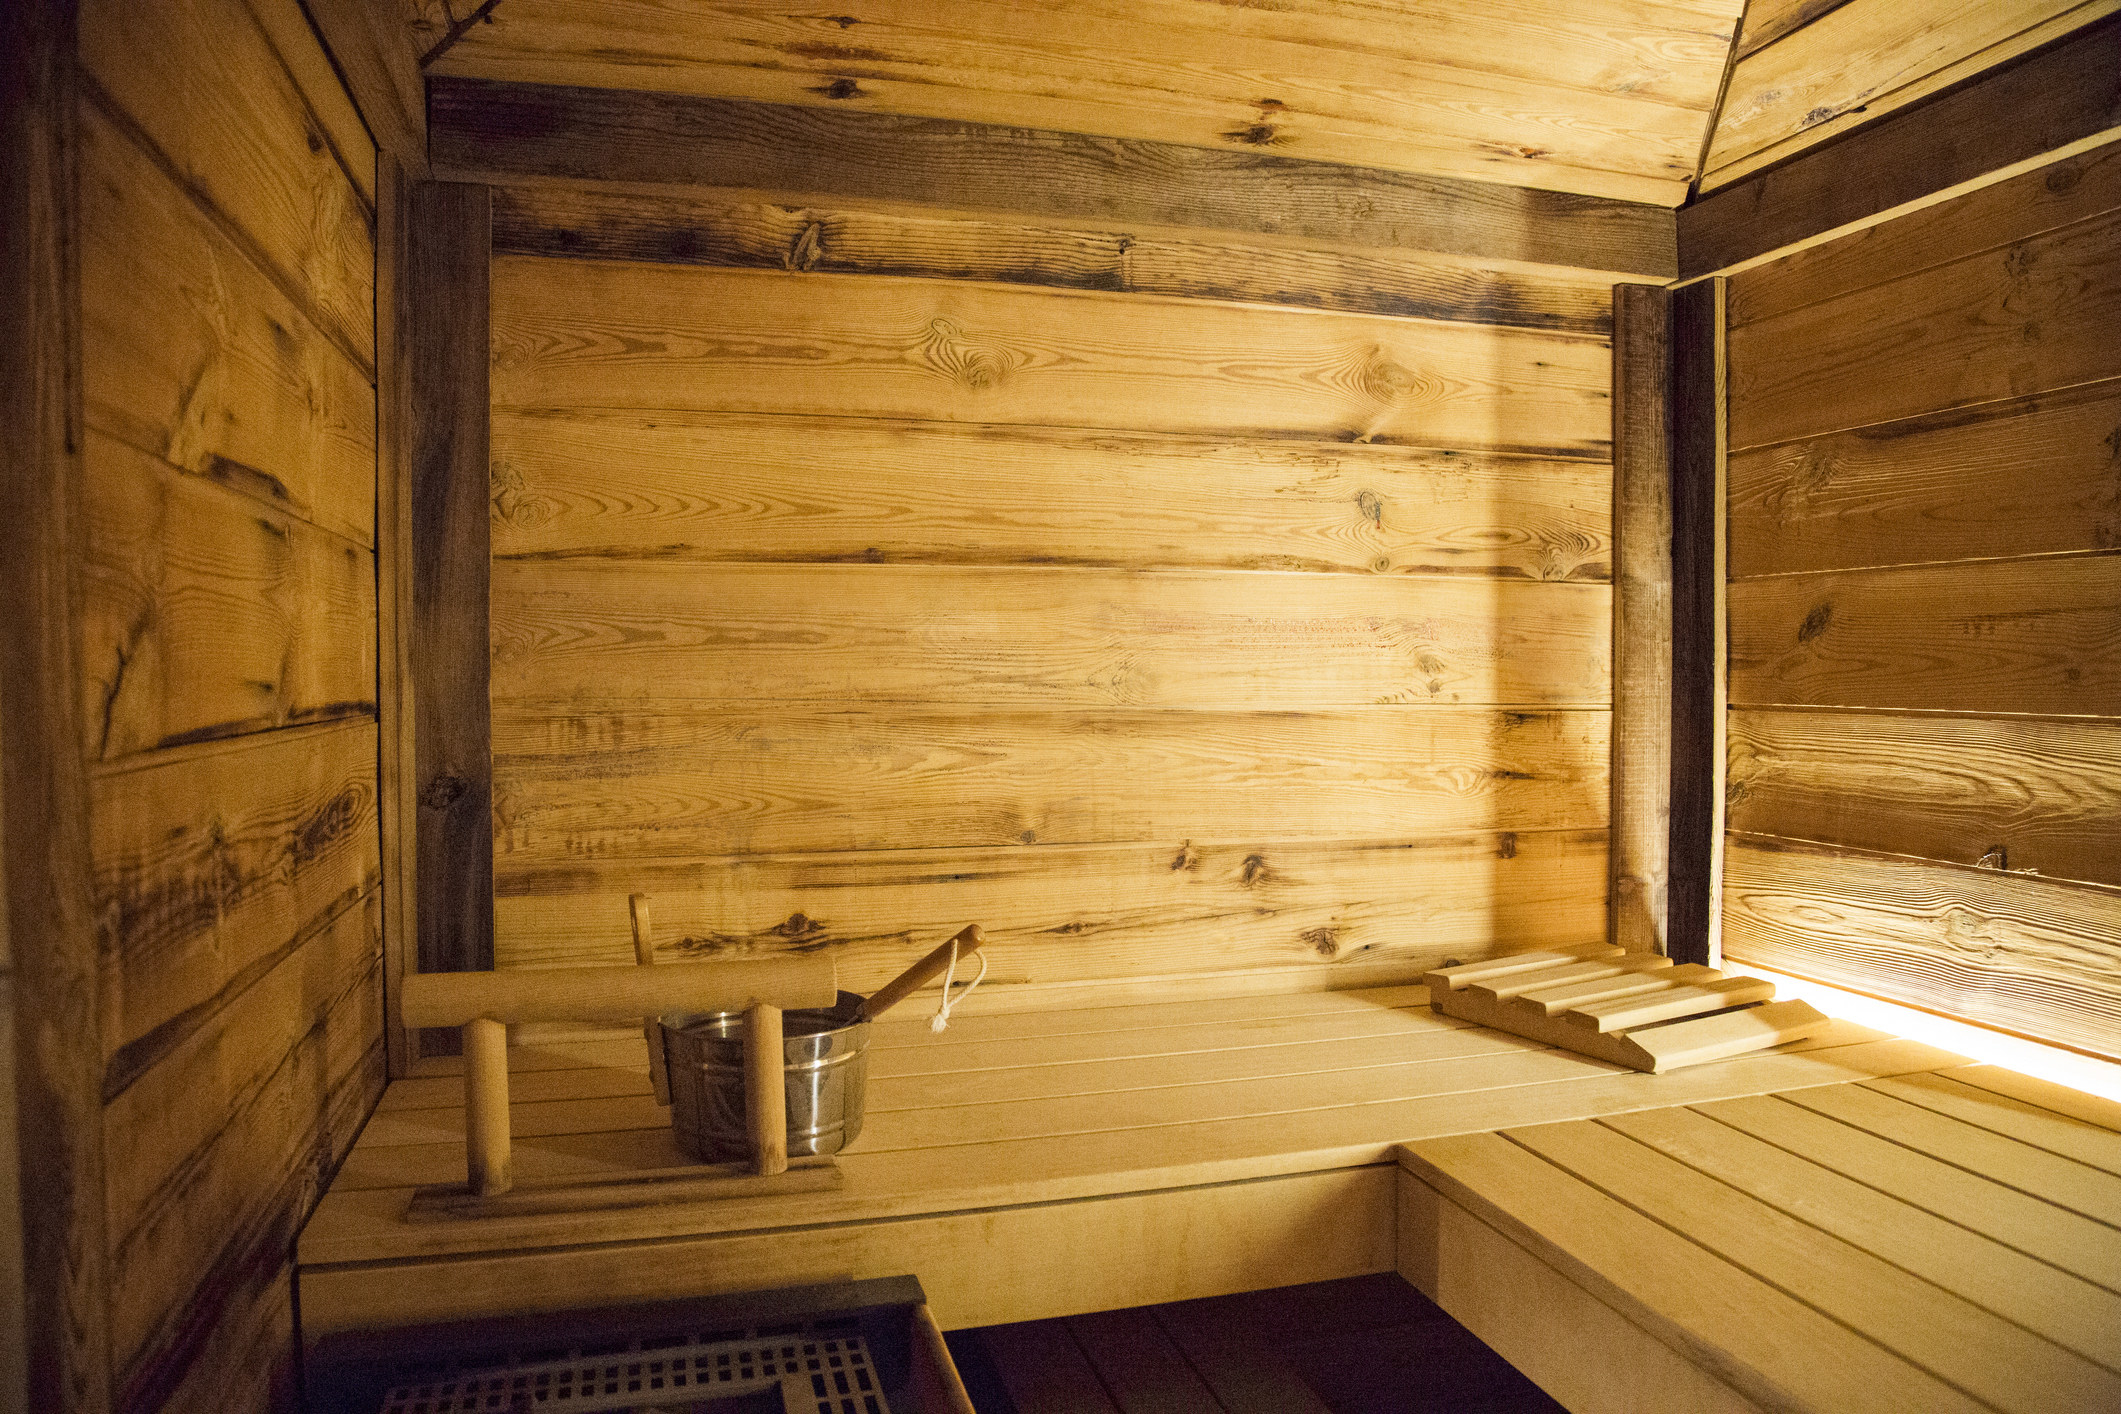 The interior of a sauna